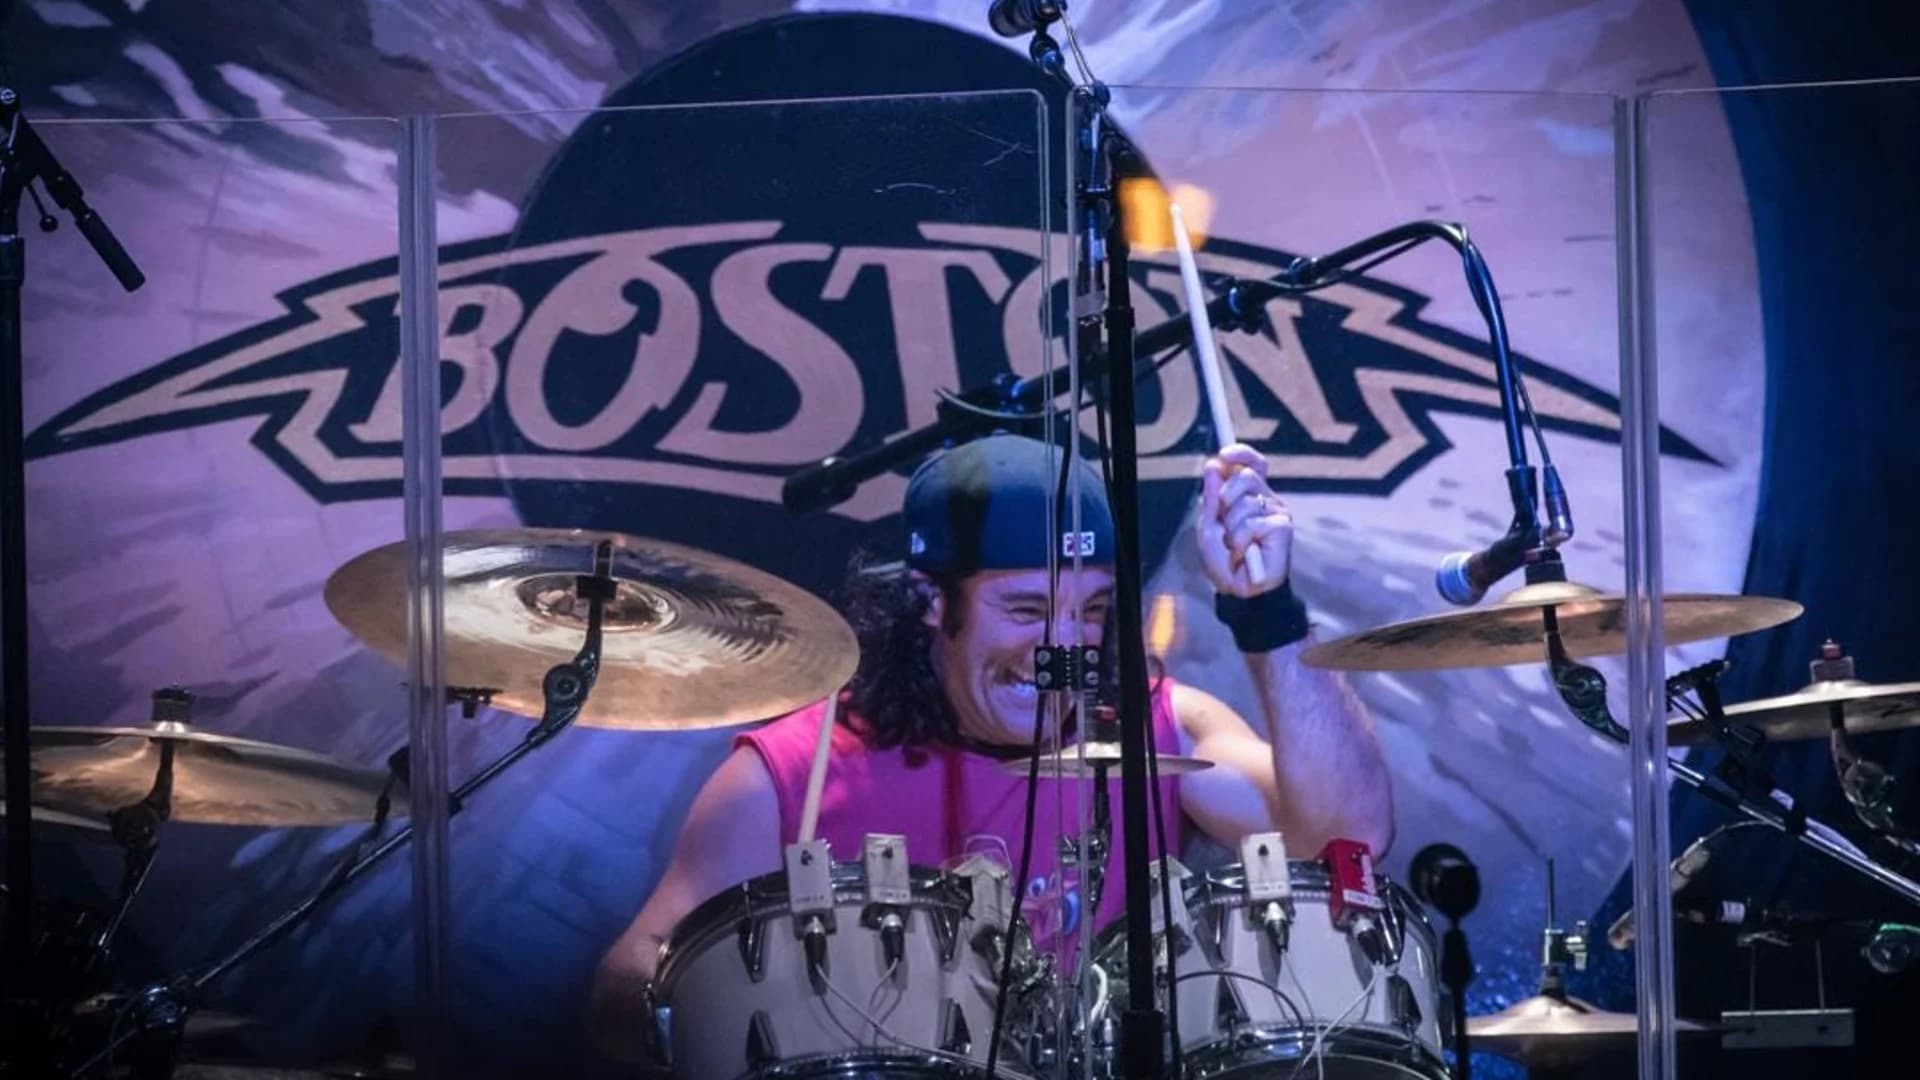 Boston performs at Jones Beach, 7/23